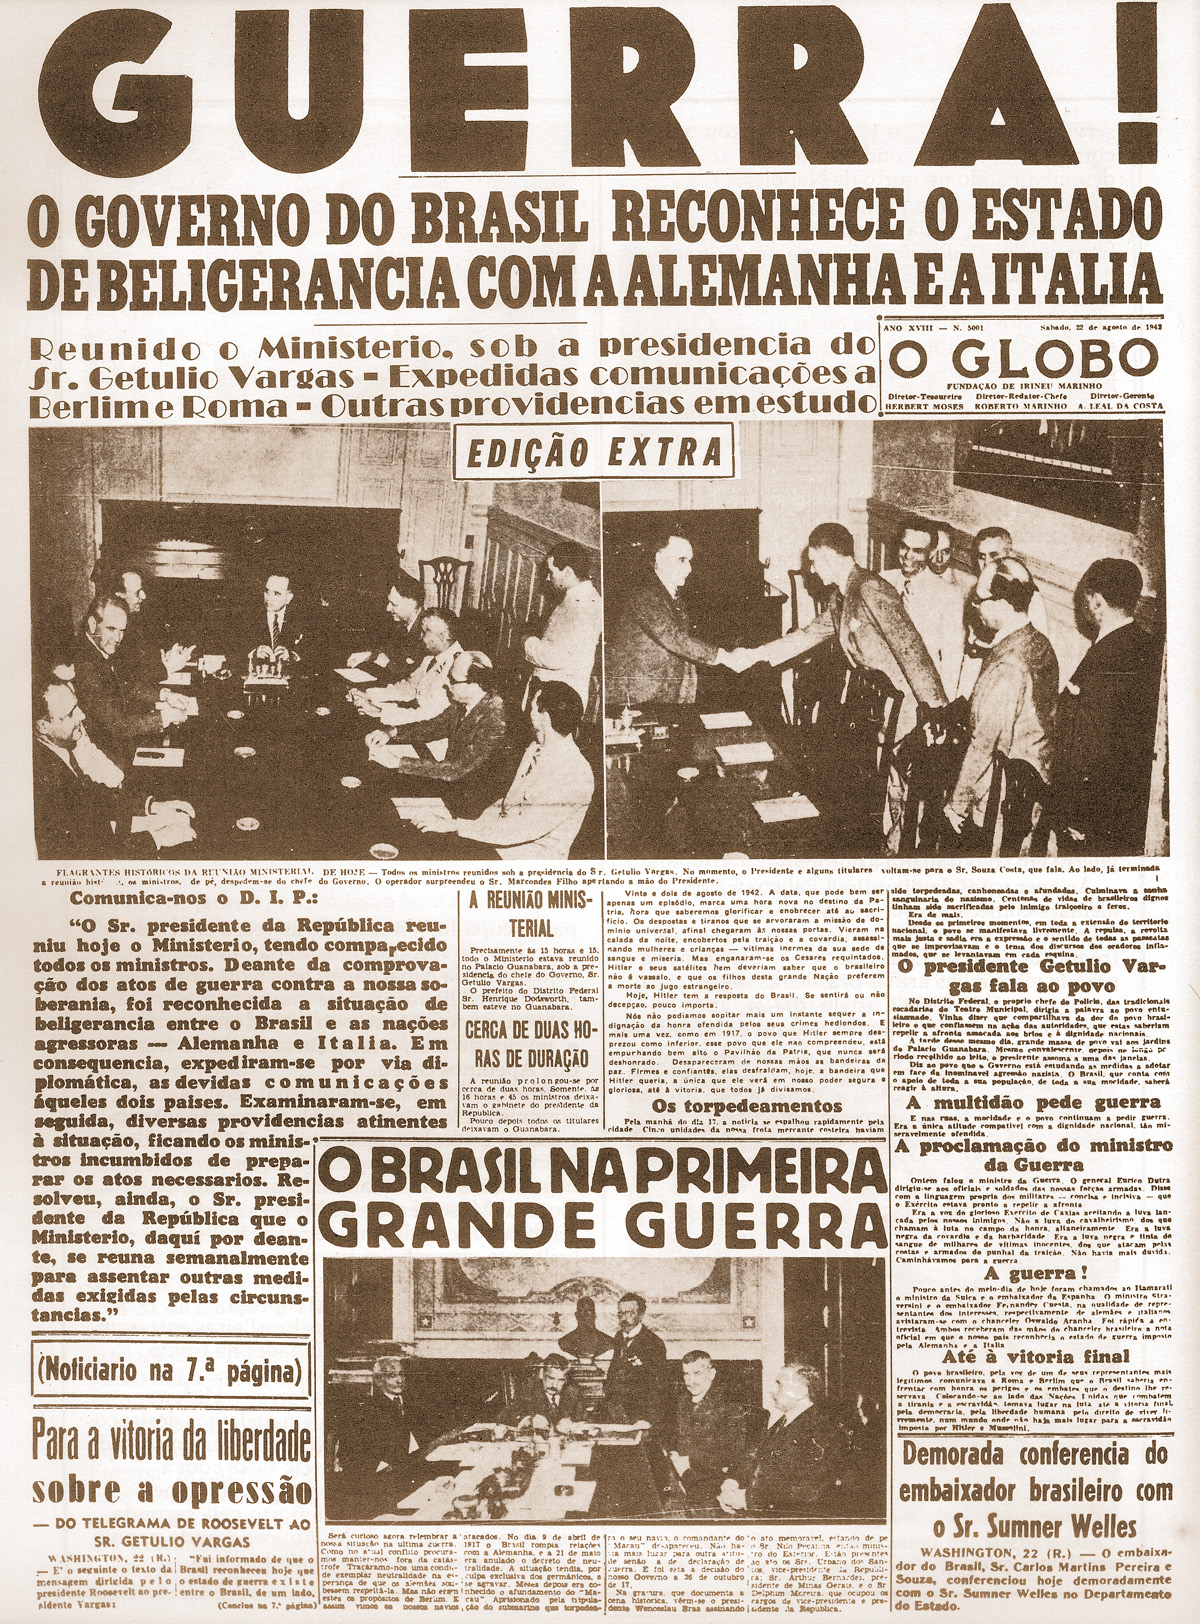 Primeira pgina do jornal O Globo: O Brasil na Guerra <a style='float:right;color:#ccc' href='https://www3.al.sp.gov.br/repositorio/noticia/N-08-2012/fg117149.jpg' target=_blank><i class='bi bi-zoom-in'></i> Clique para ver a imagem </a>